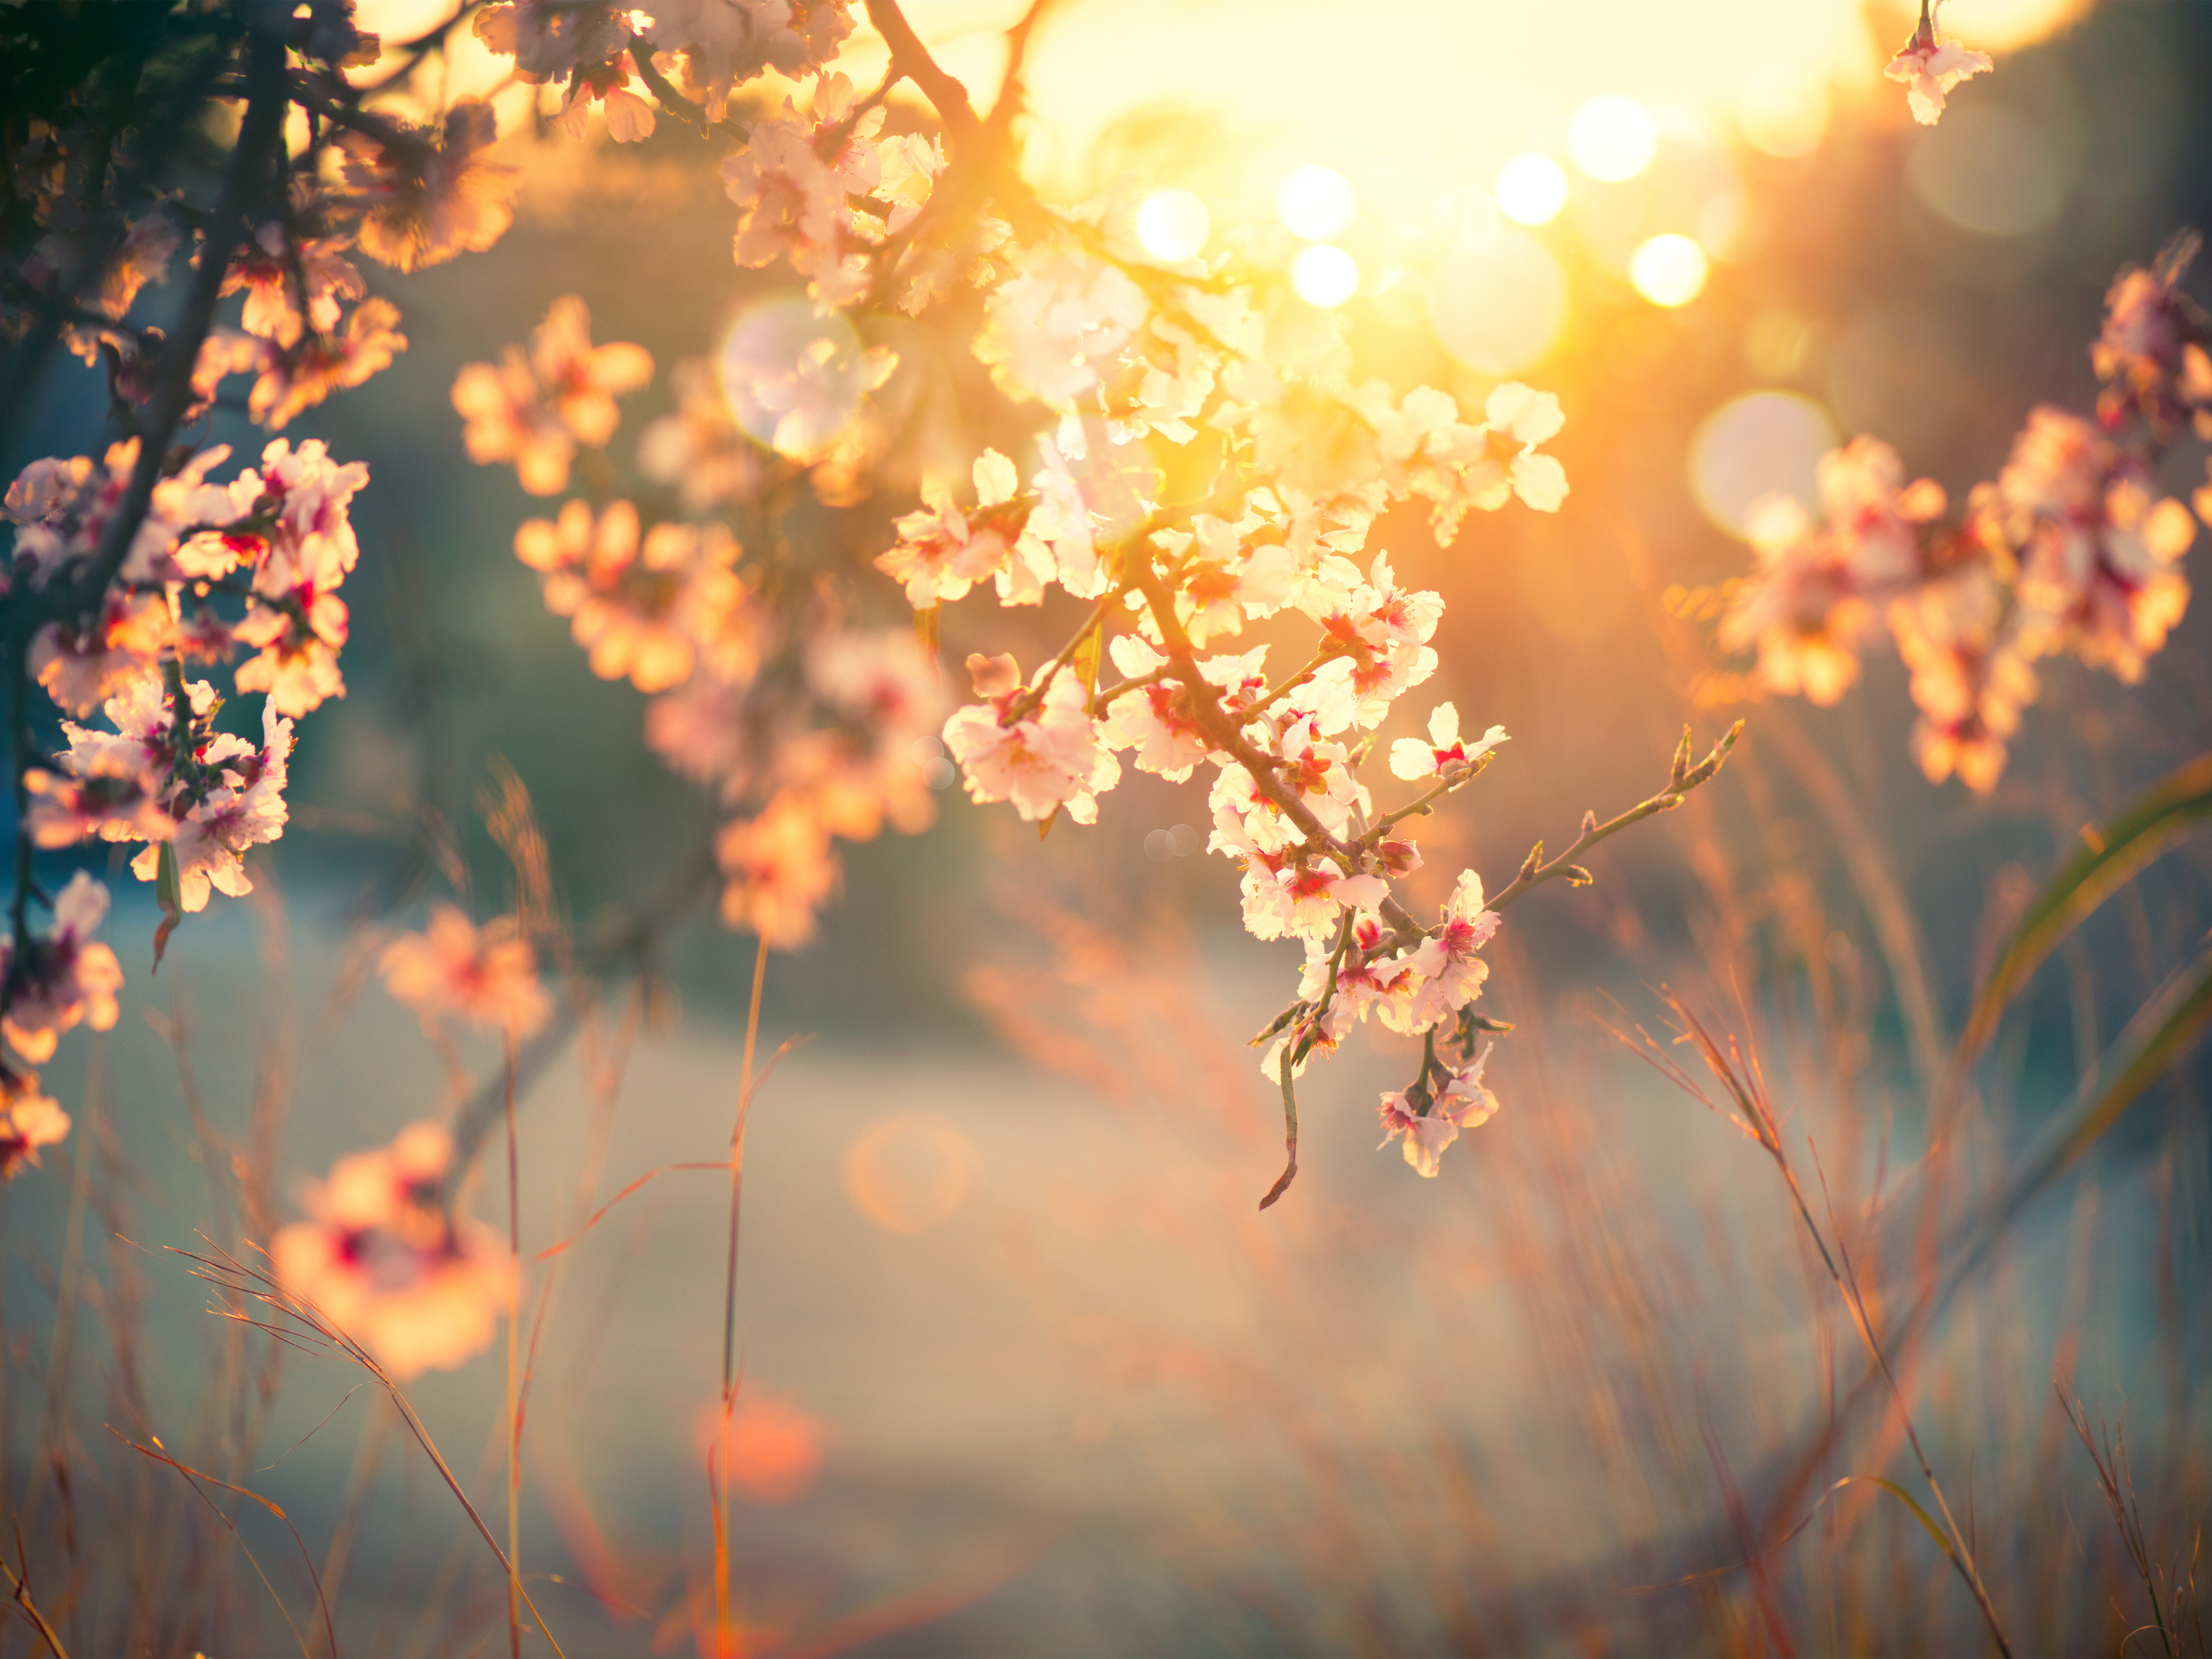 Sun shining through a flowering tree